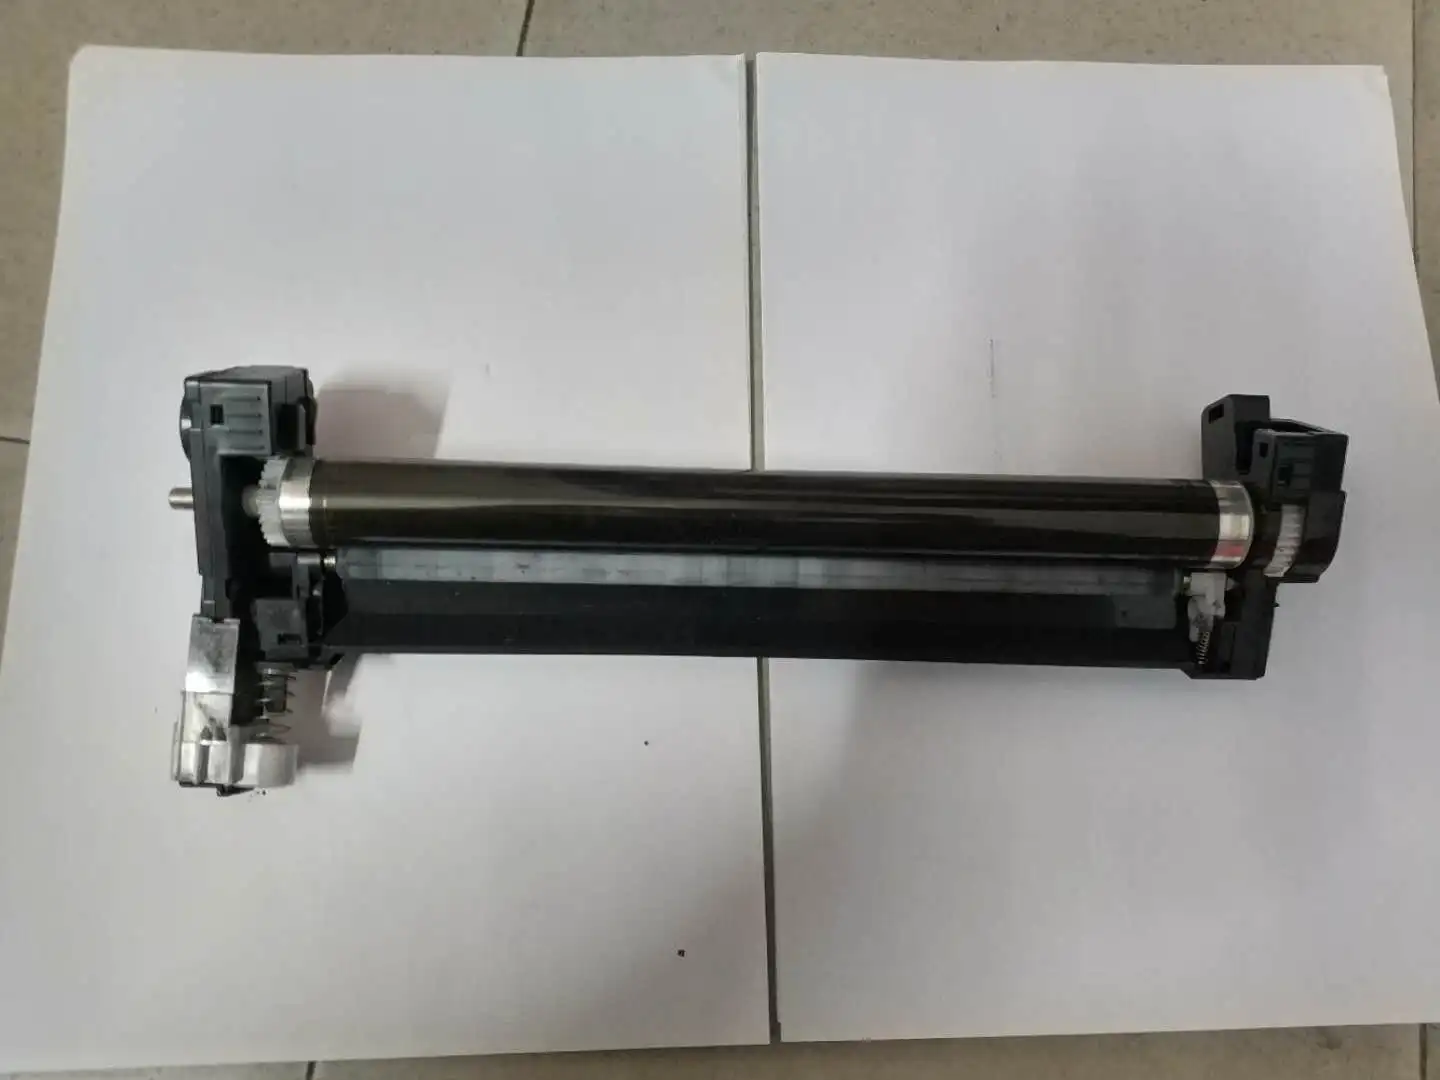 

Cartridges and toner assembly for Kyocera 1040 1060 1020 1025 1120 printer